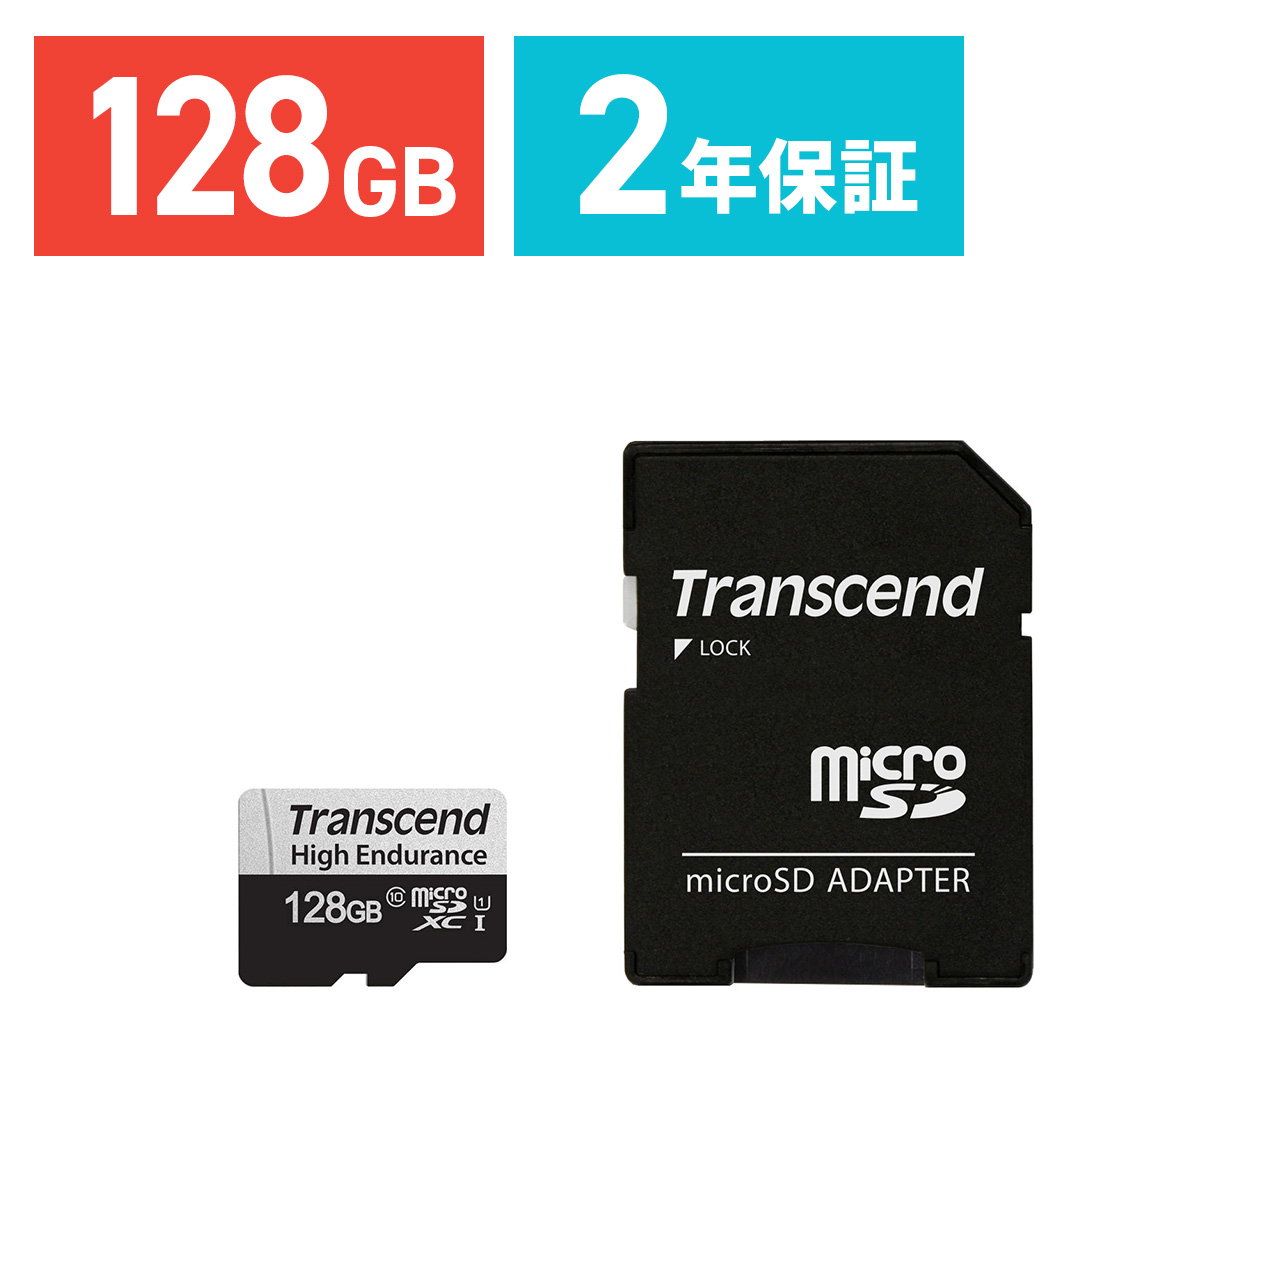 microSDXCカード 128GB Class10 UHS-I U1 高耐久 SDカード変換アダプタ付き Nintendo Switch ROG Ally 対応 Transcend製 TS128GUSD350V